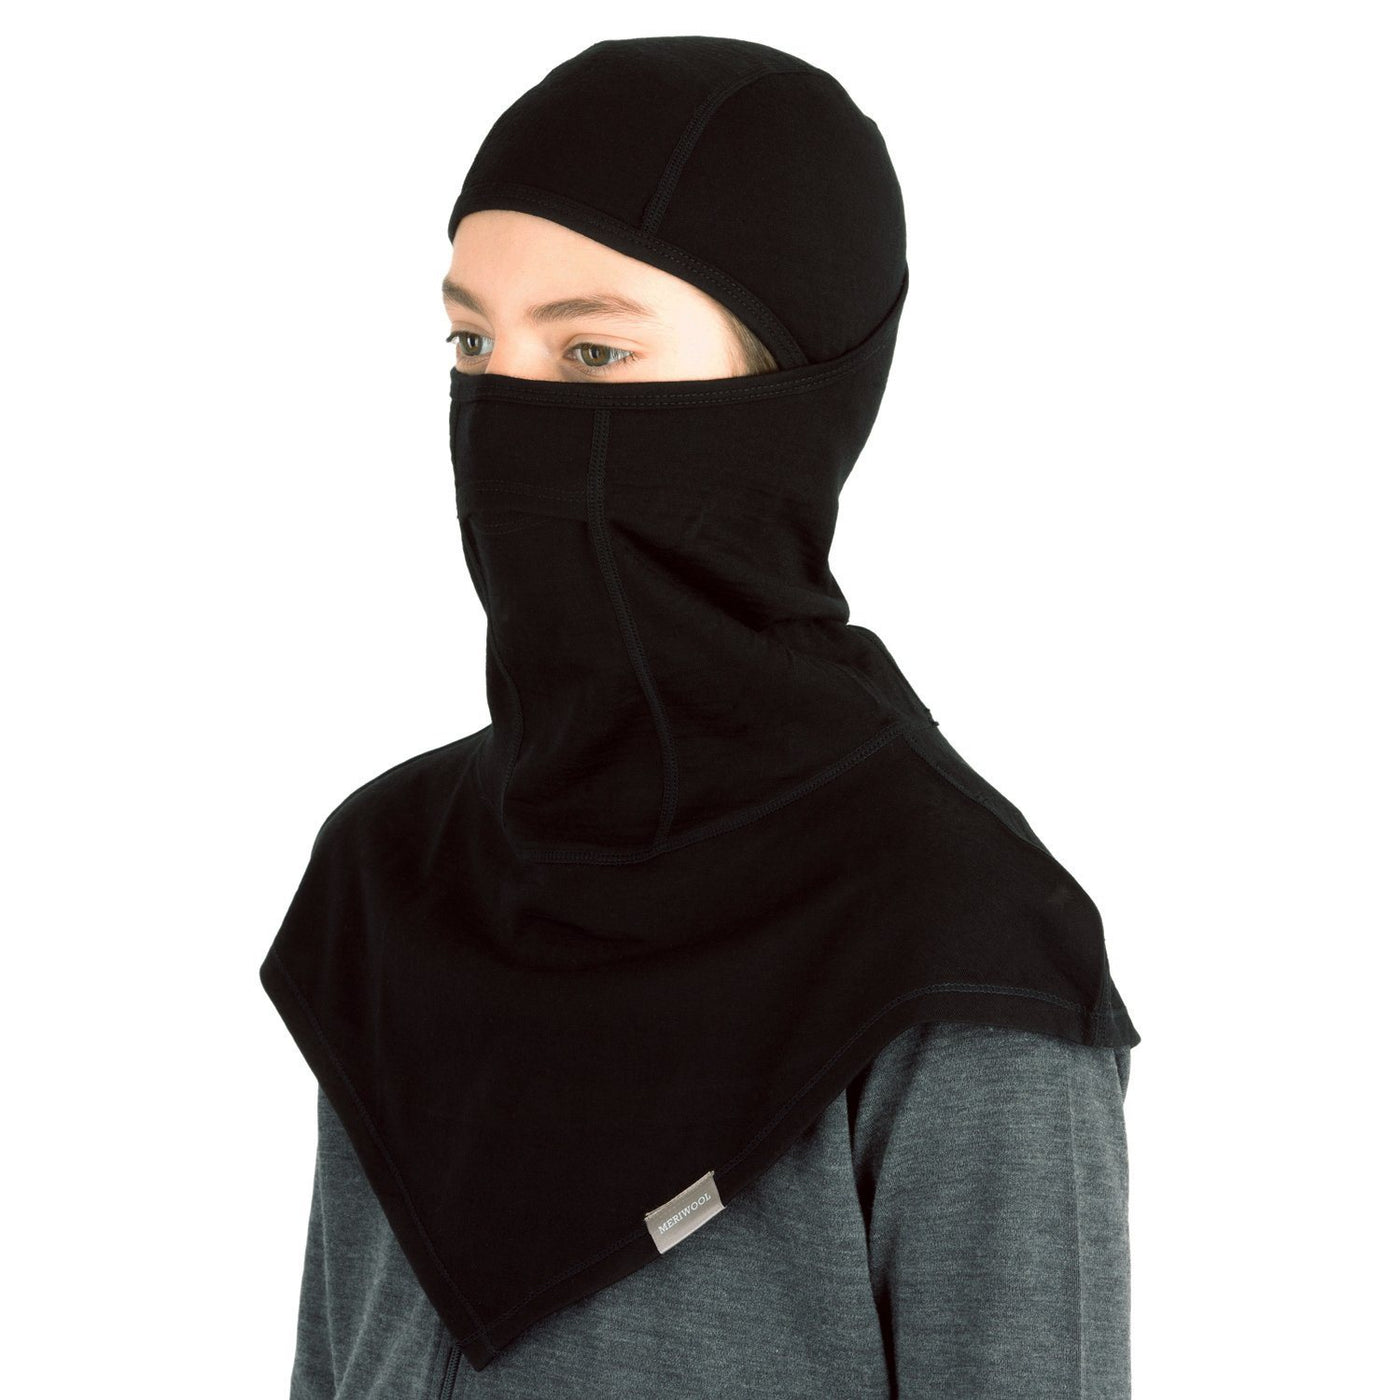 teenager wearing a black merino wool 200 youth balaclava face mask